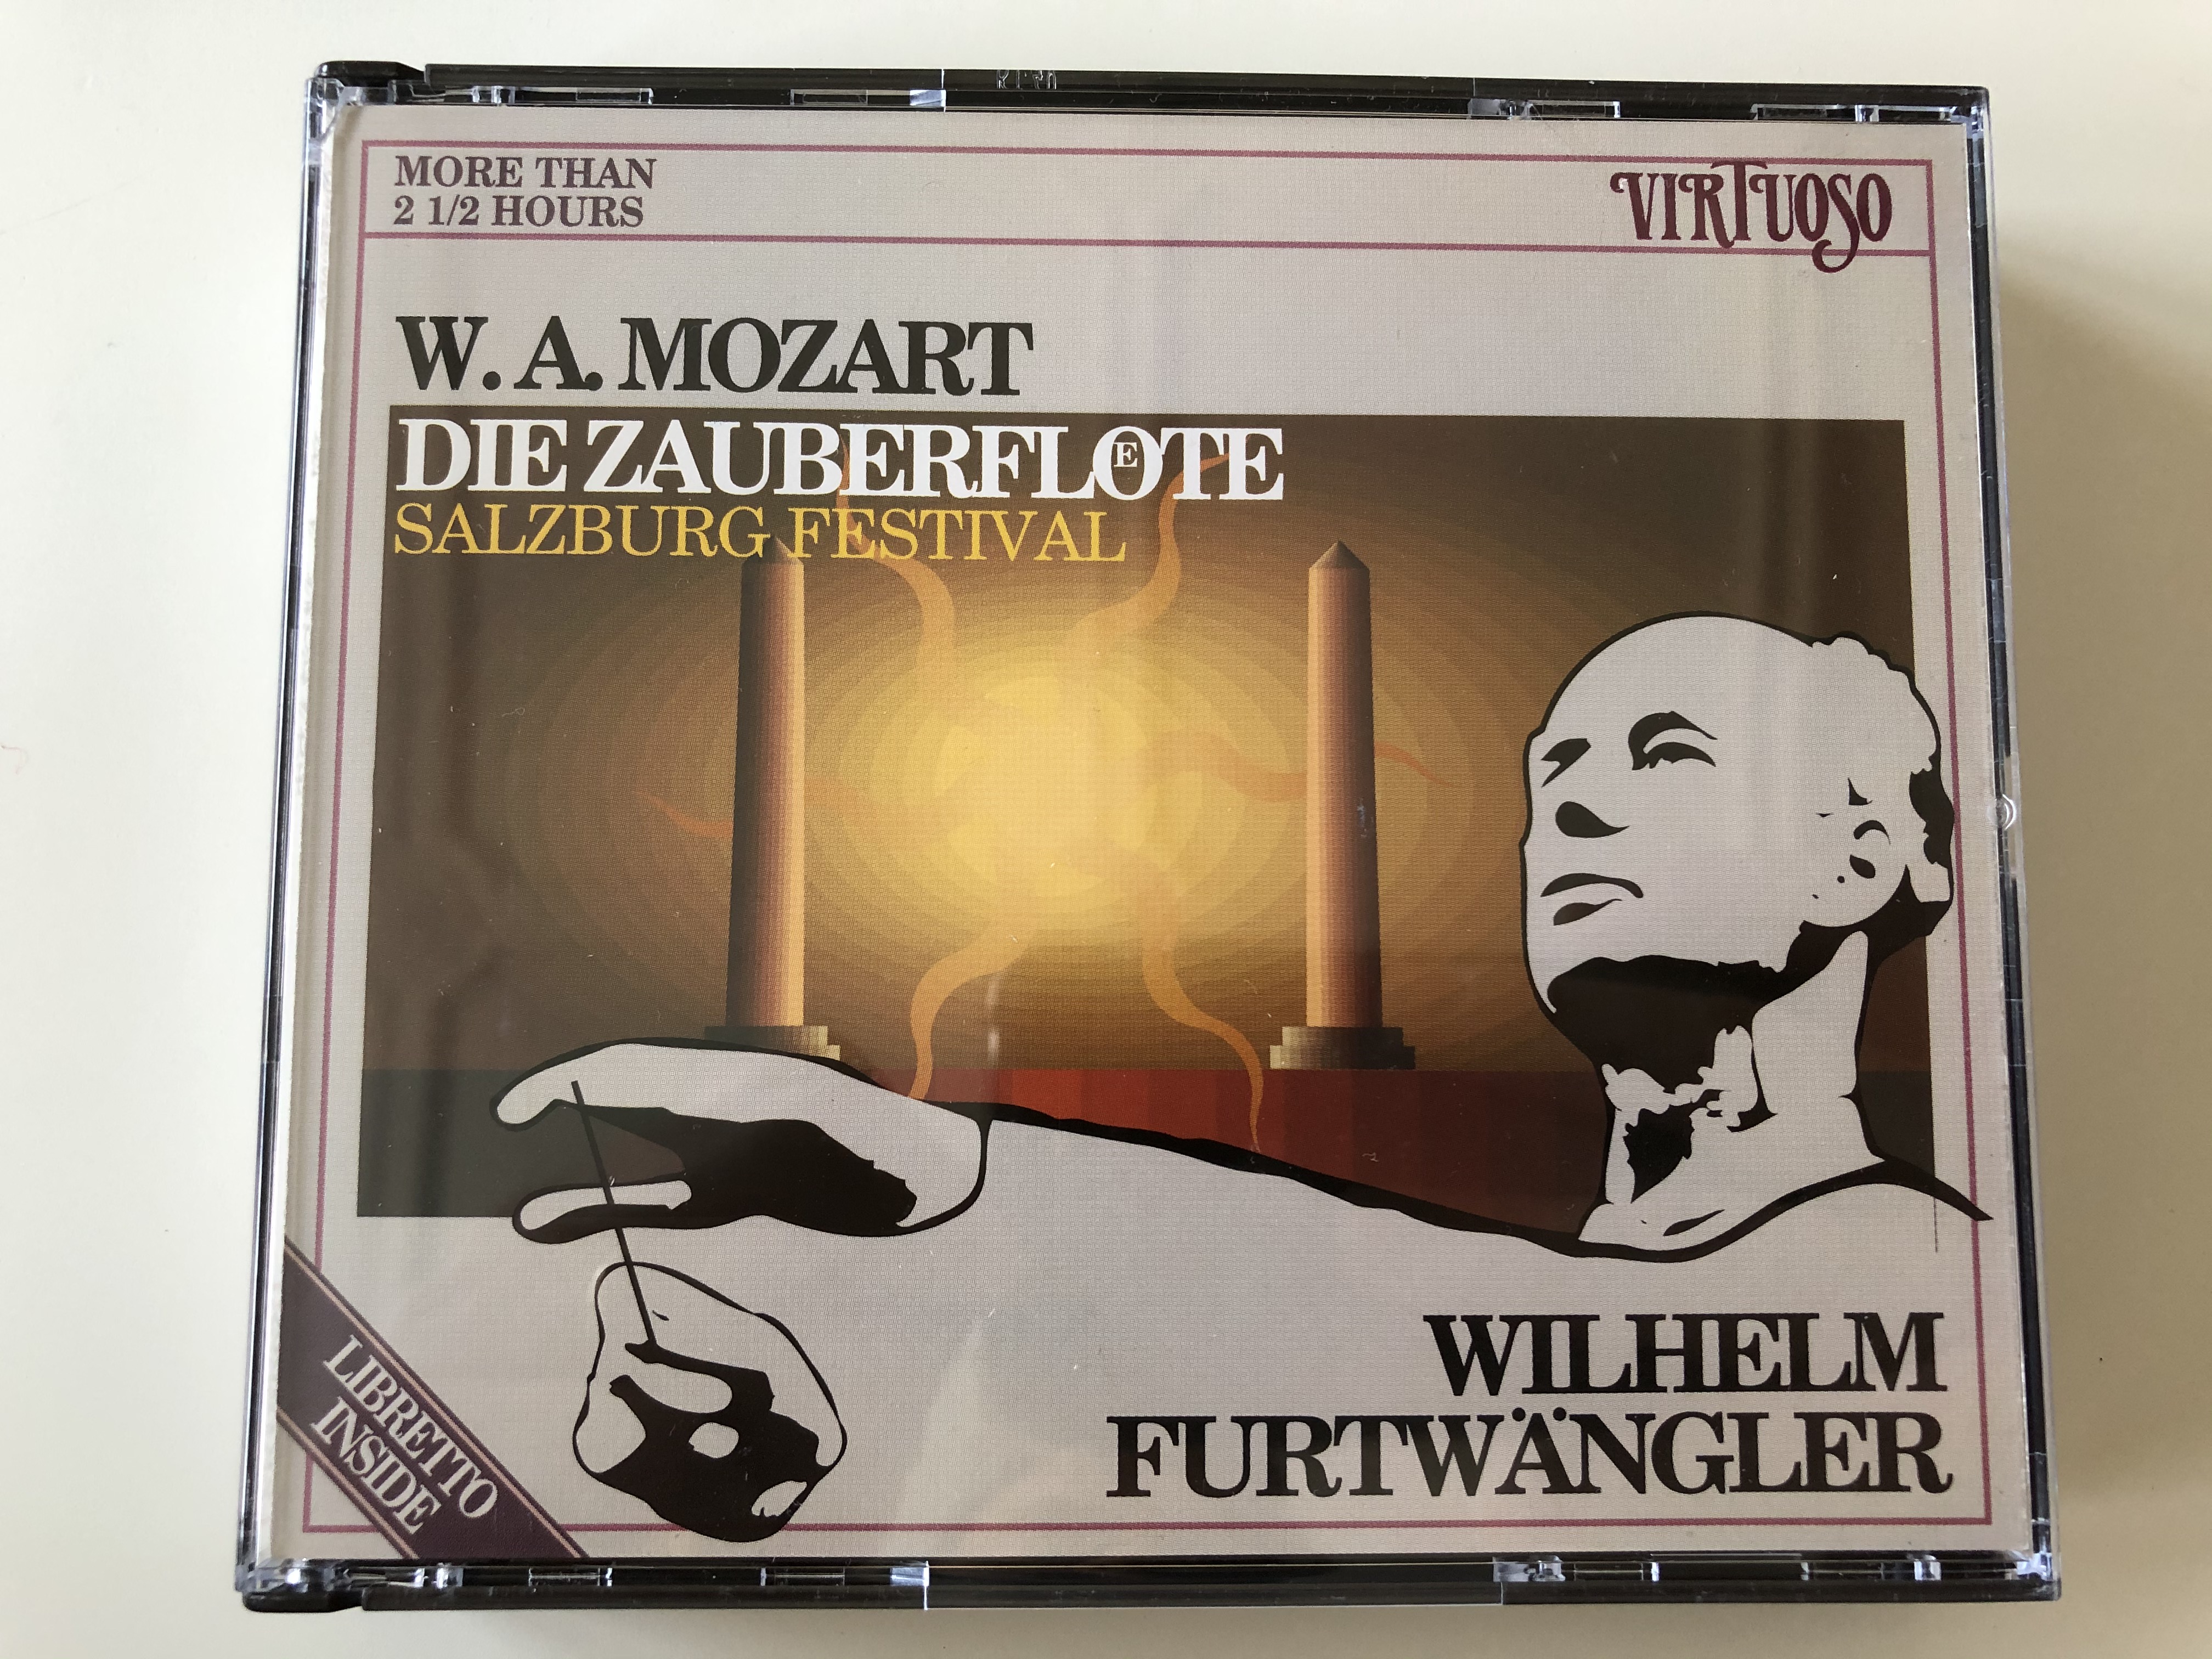 w.-a.-mozart-die-zauberfl-te-salzburg-festival-wilhelm-furtw-ngler-more-than-2-12-hours-virtuoso-3x-audio-cd-1989-2699192-1-.jpg